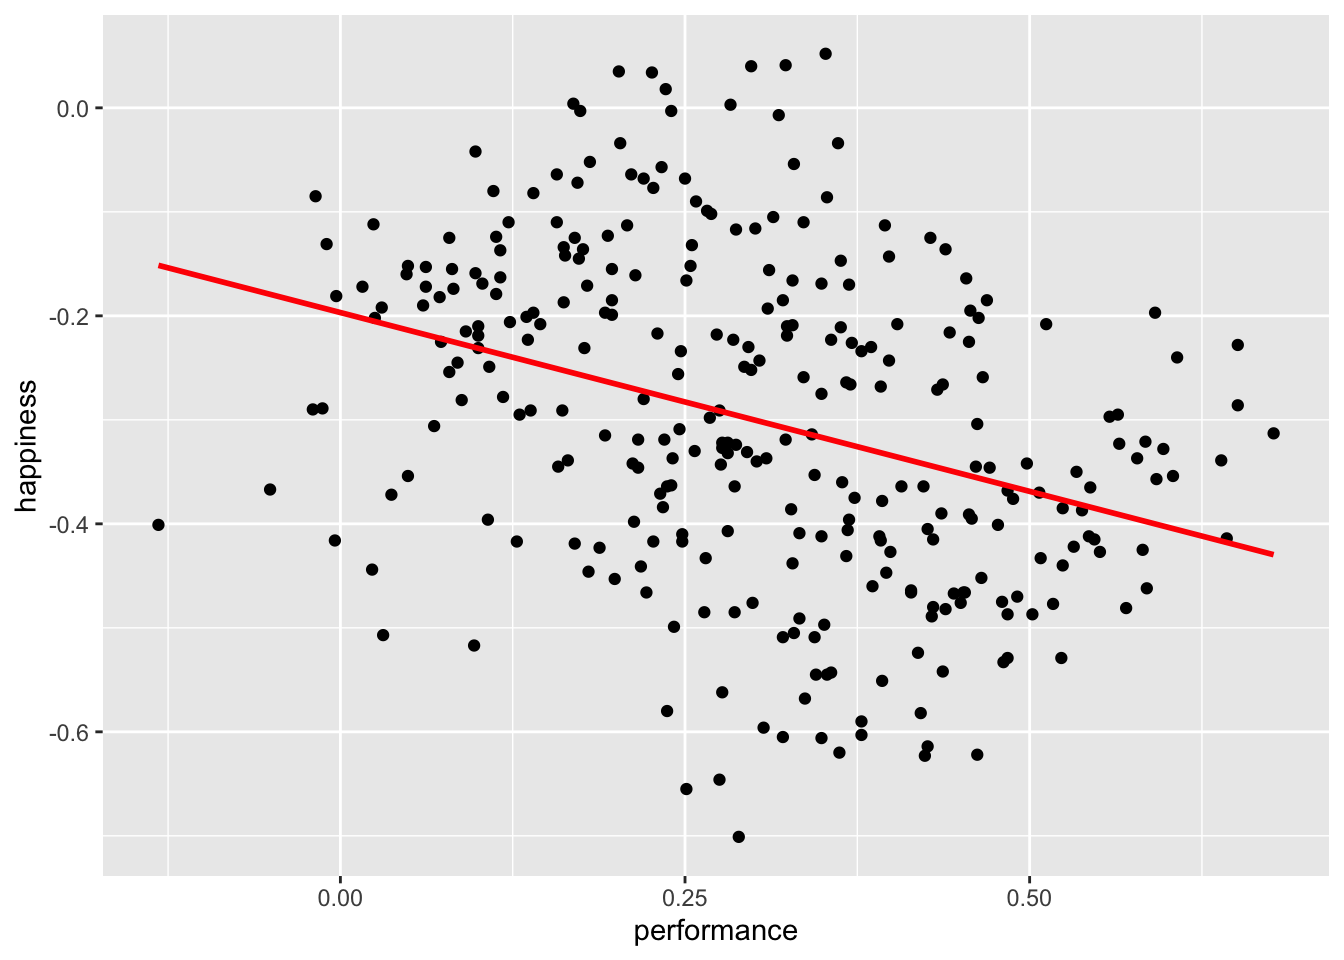 spearman correlation graph